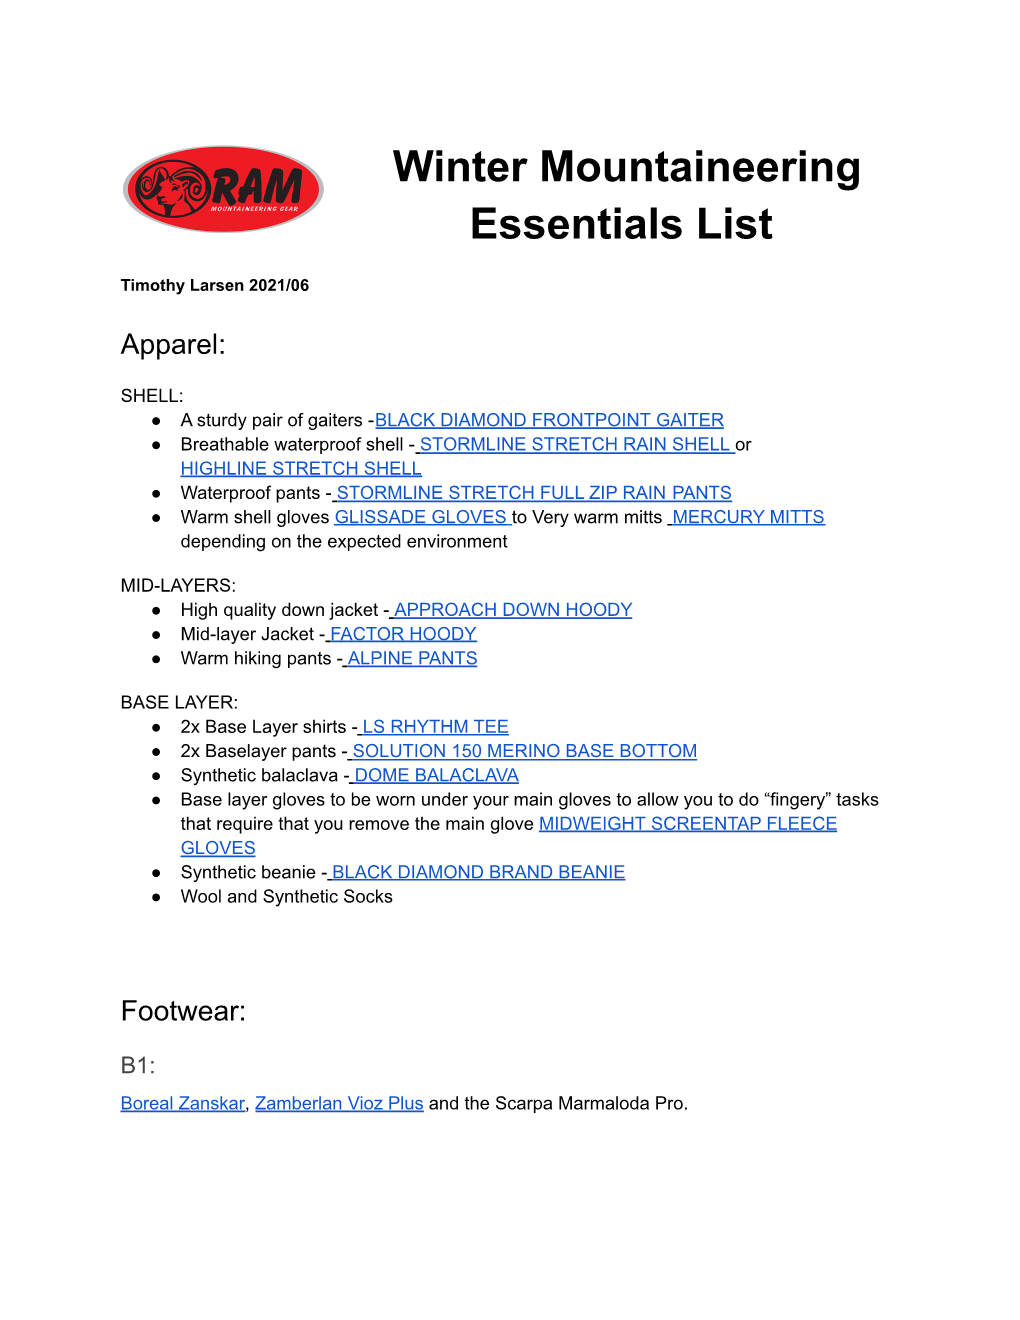 SA Winter Mountaineering Essentials List